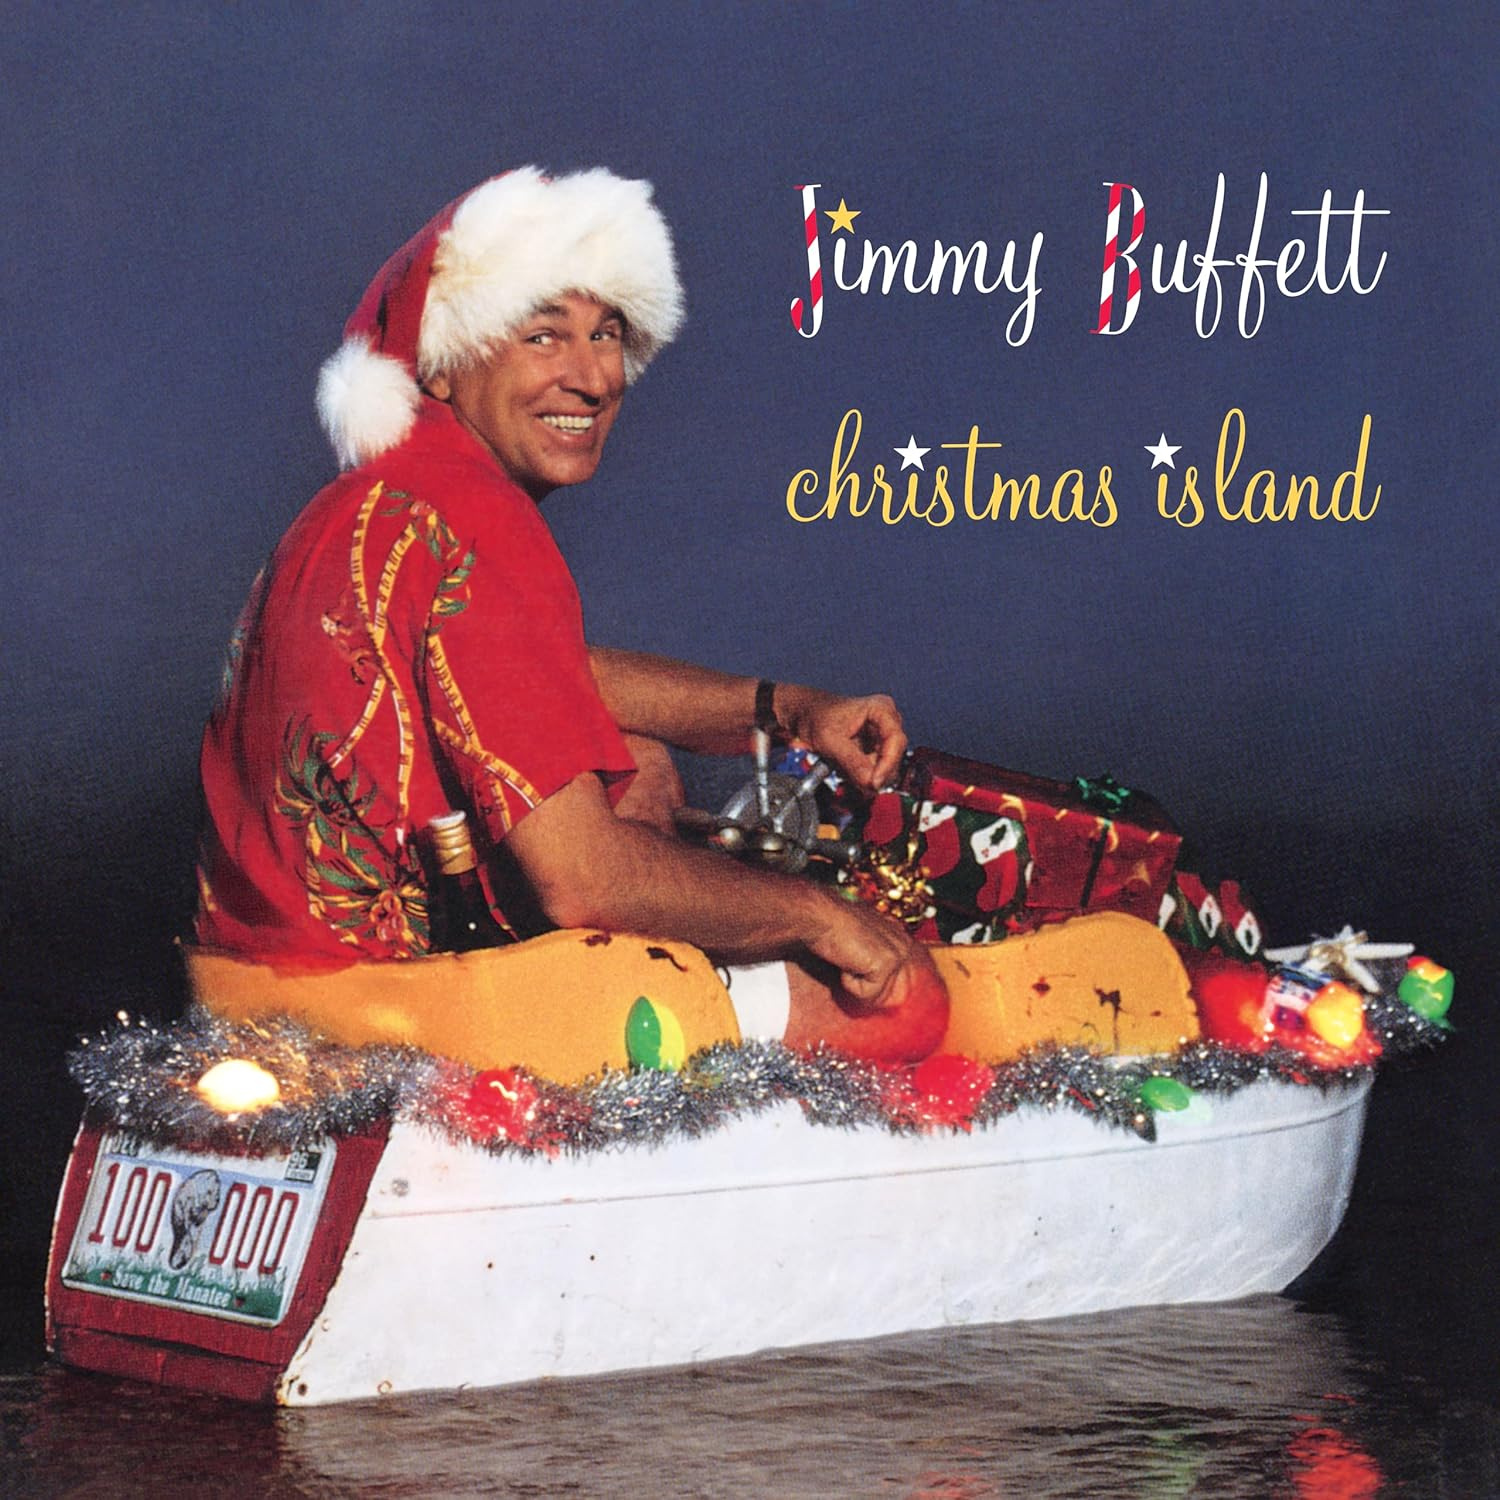 Jimmy Buffett - Christmas Island vinyl cover